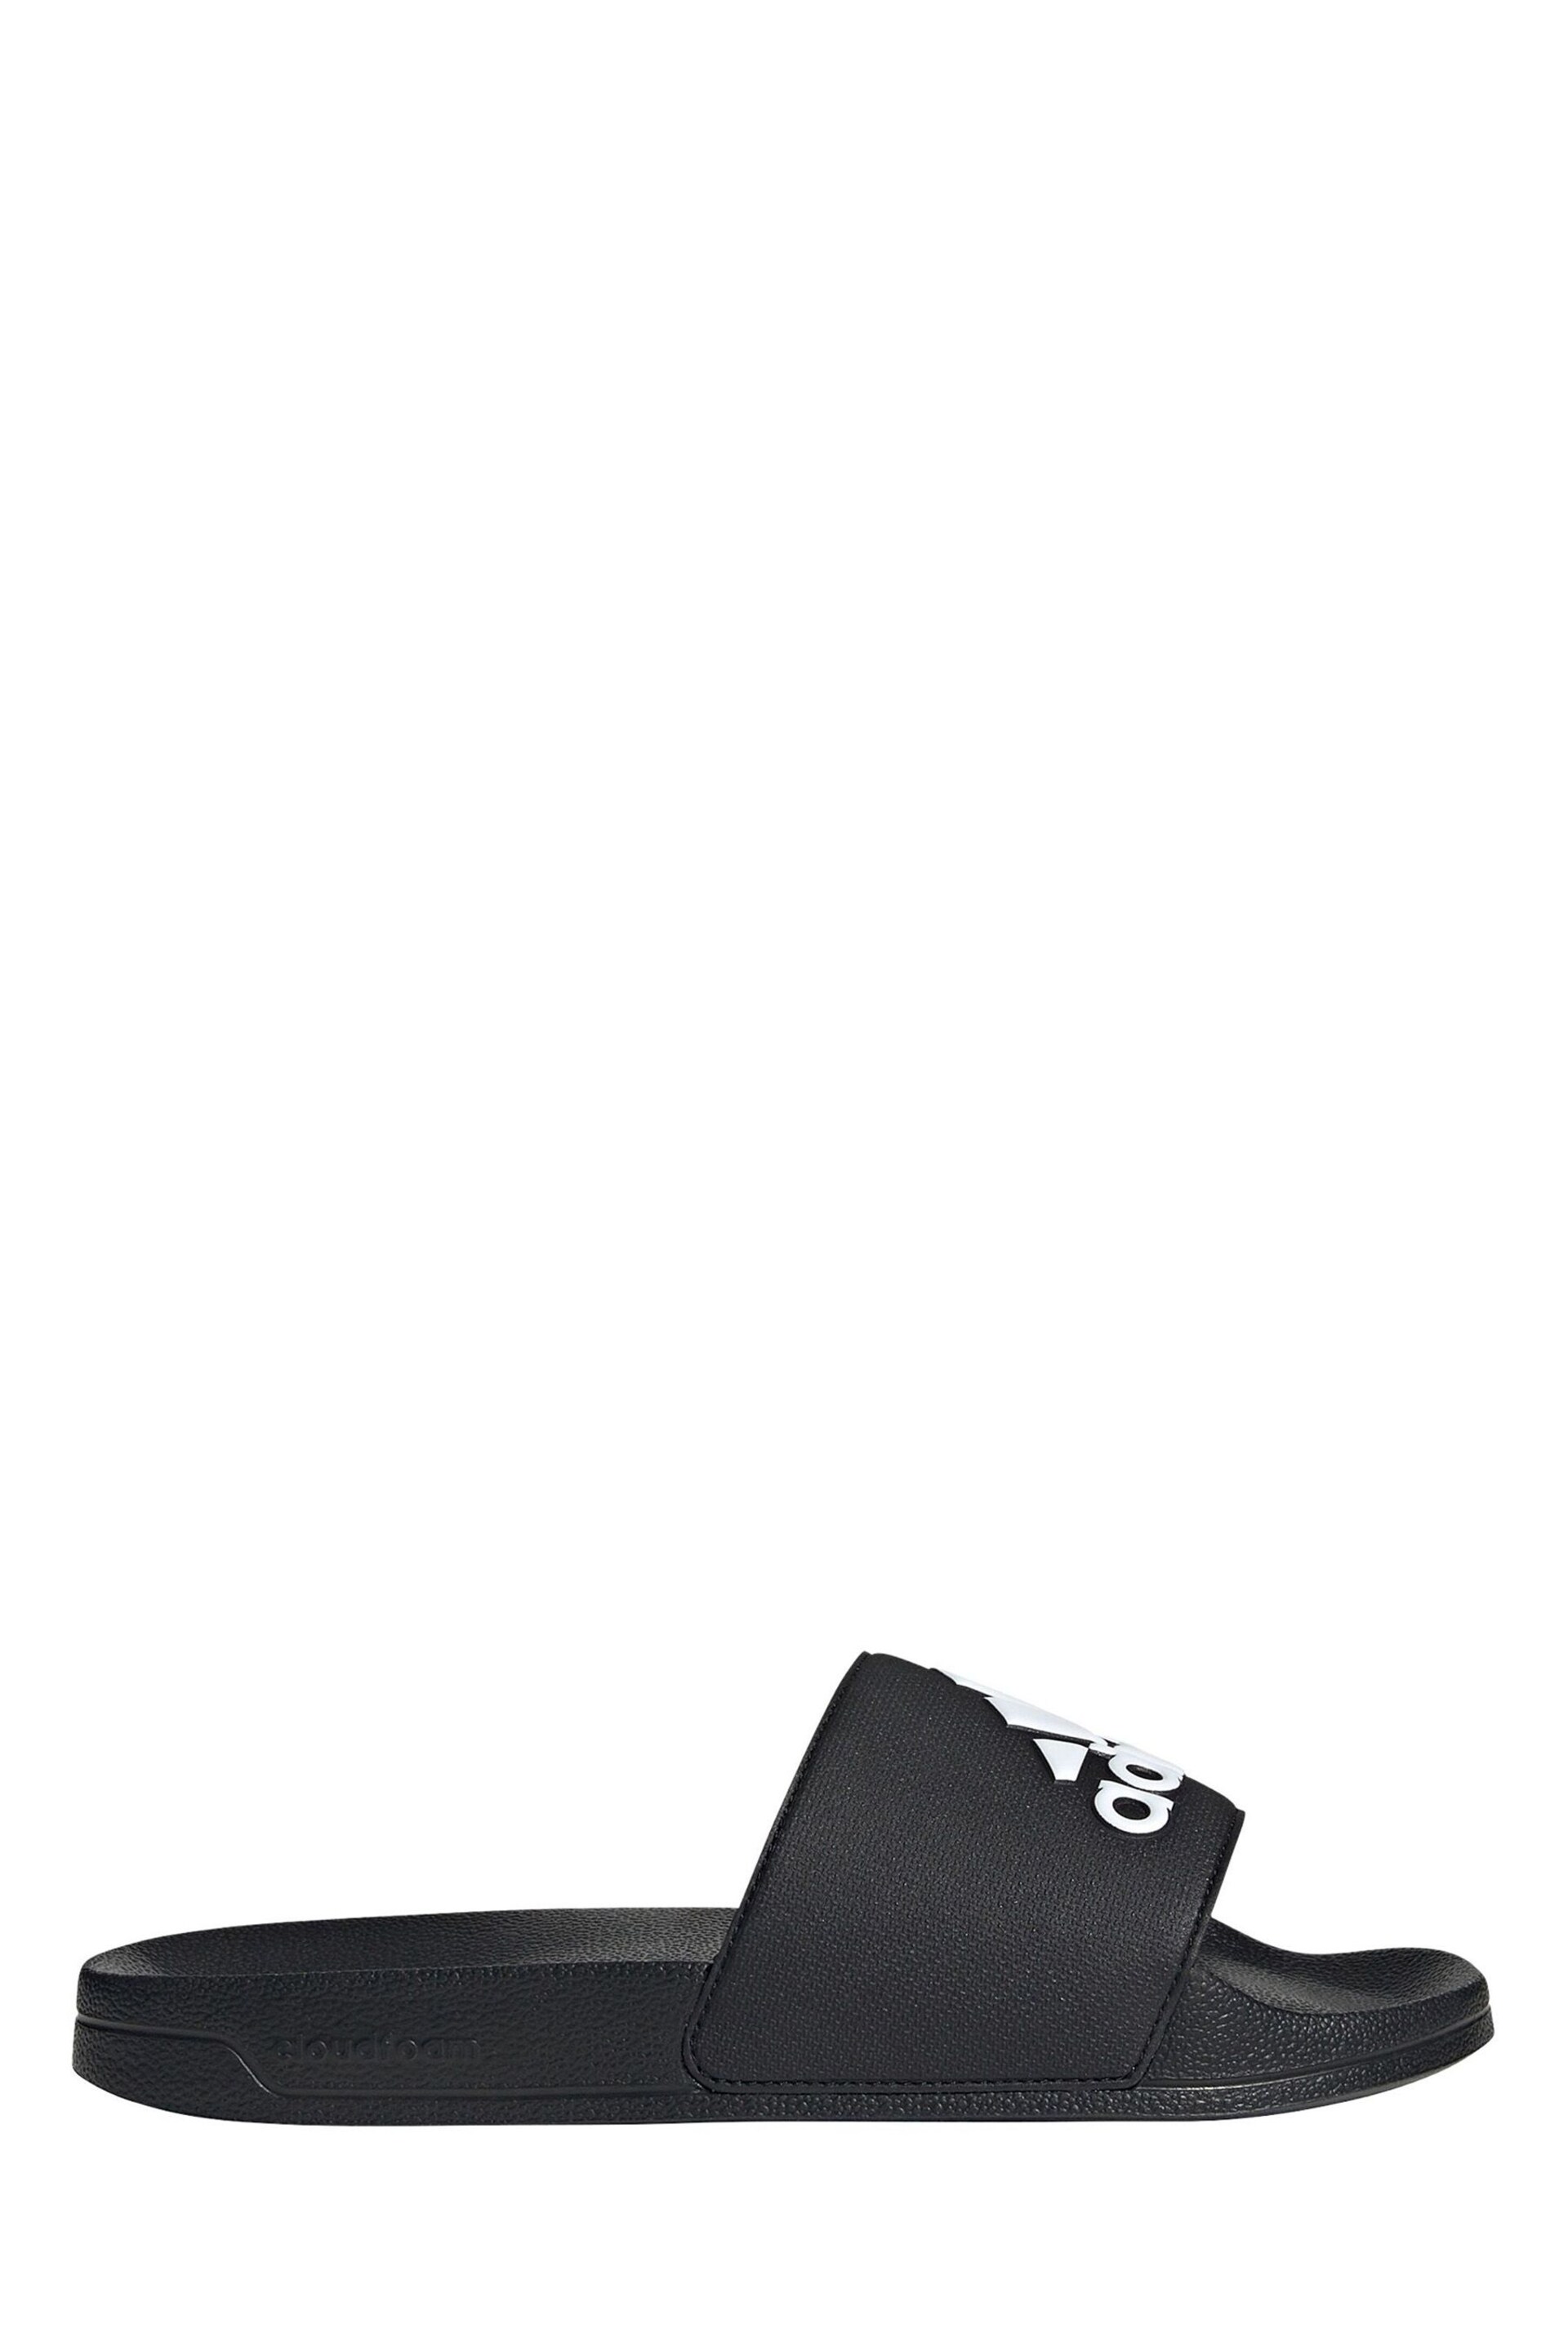 adidas Black Sportswear Adilette Shower Slides - Image 3 of 10